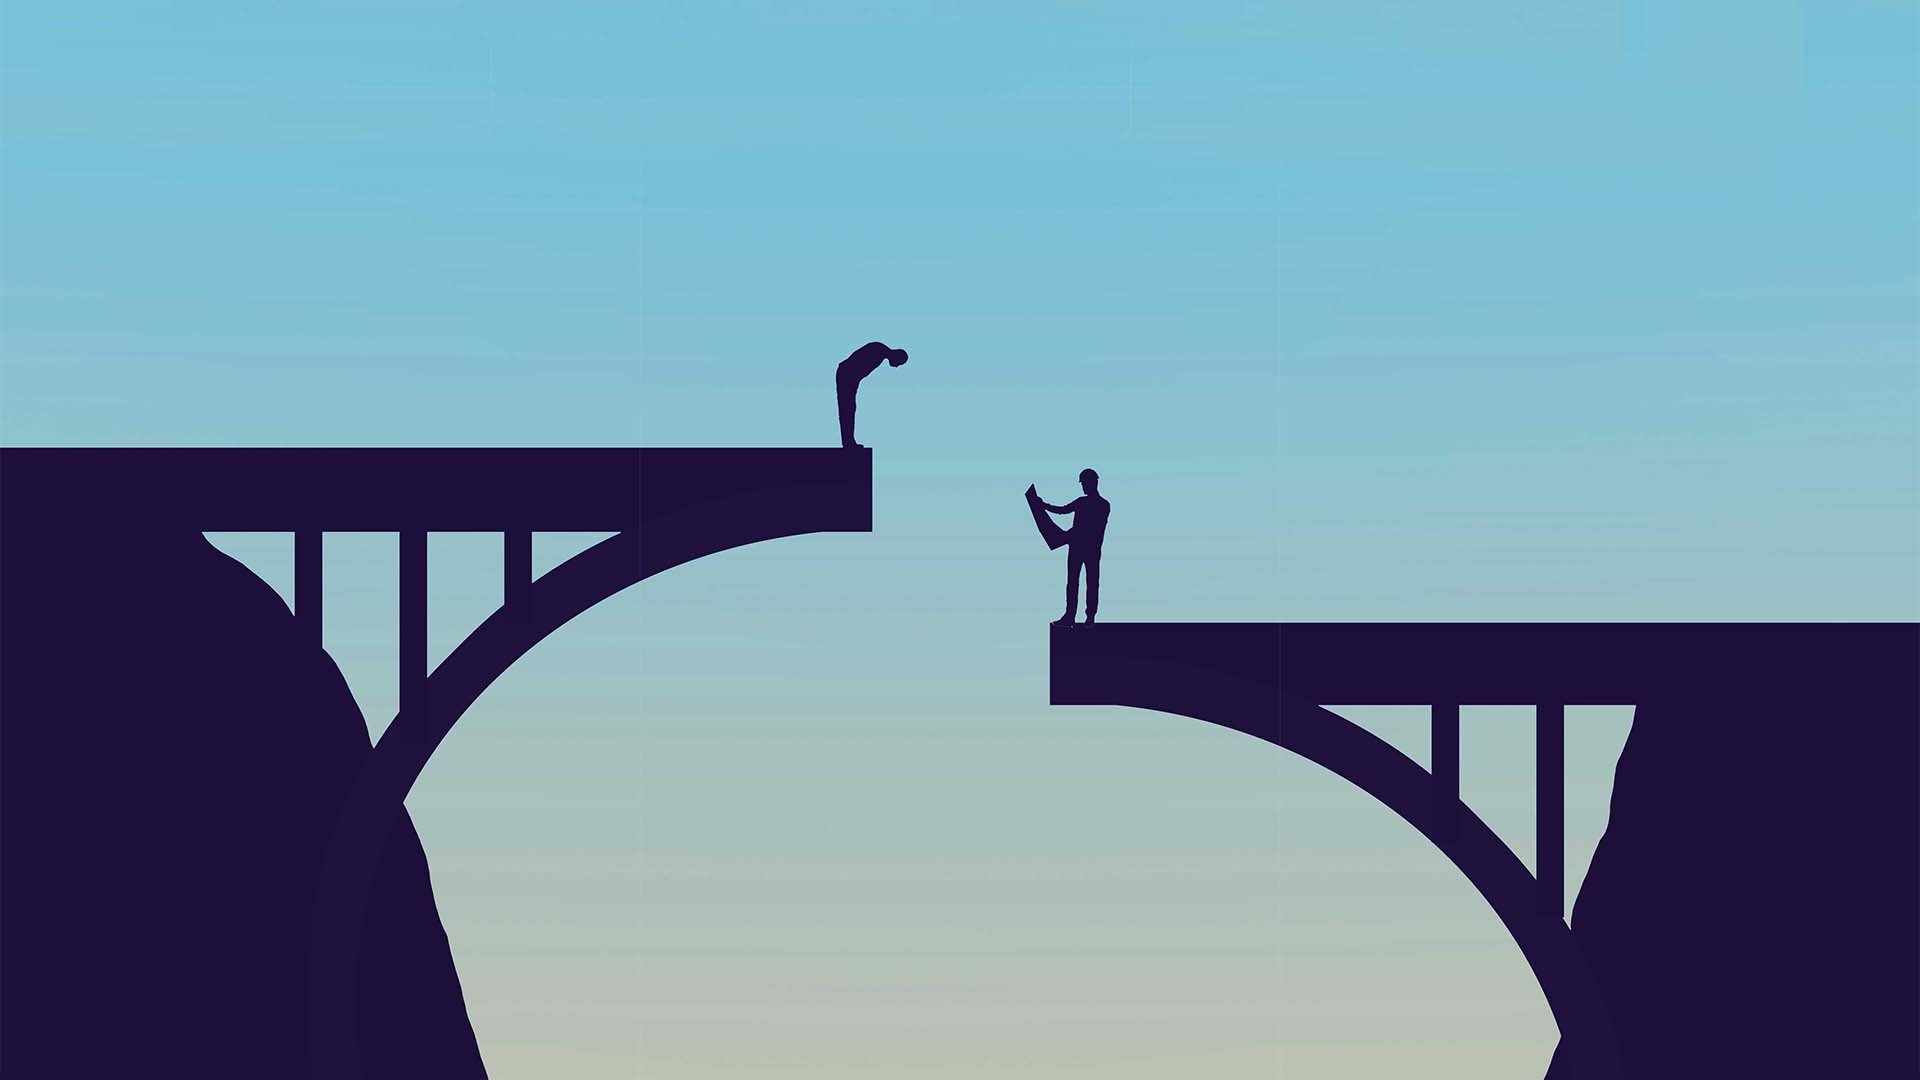 two men standing on a misaligned bridge error management